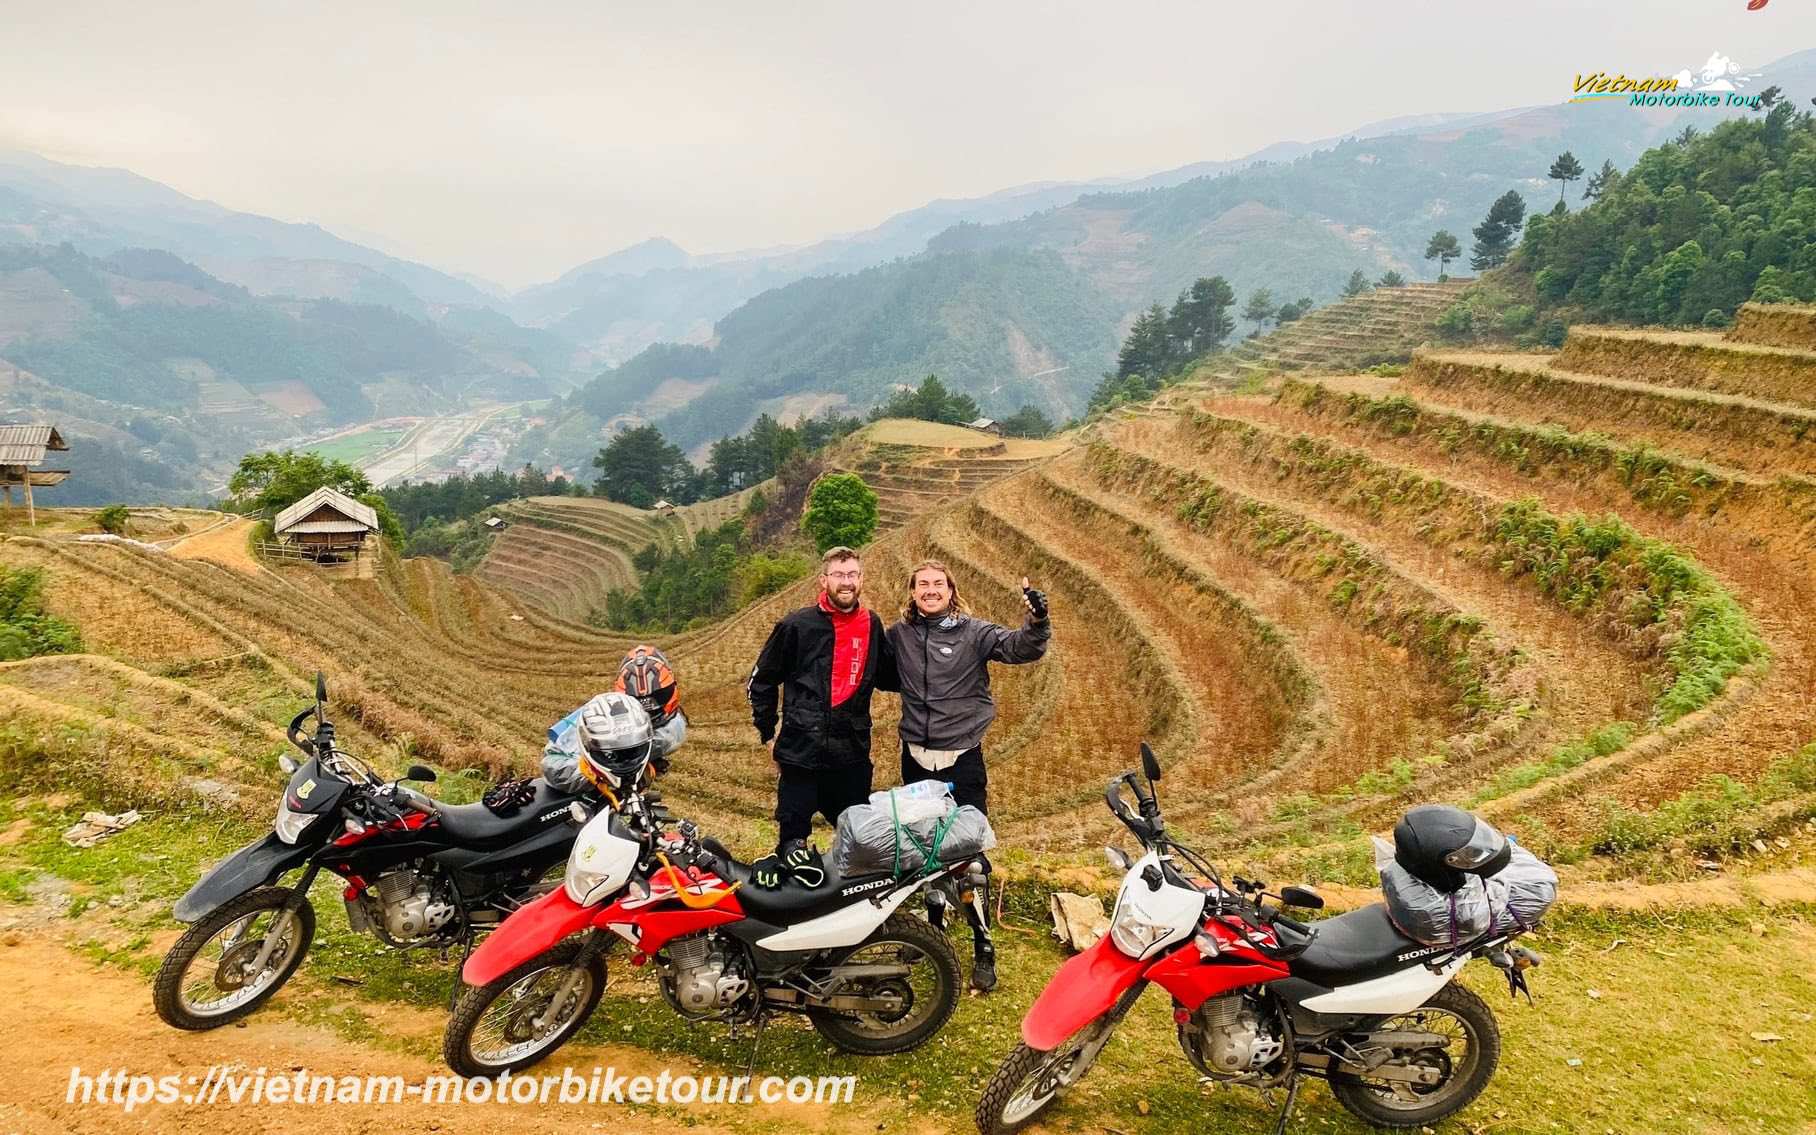 MU CANG CHAI MOTORCYCLE TOUR TO SAPA  - Impressive Vietnam Off-road Motorbike Tour to Ta Xua, Mu Cang Chai, Sapa, Luc Yen, Nghia Lo